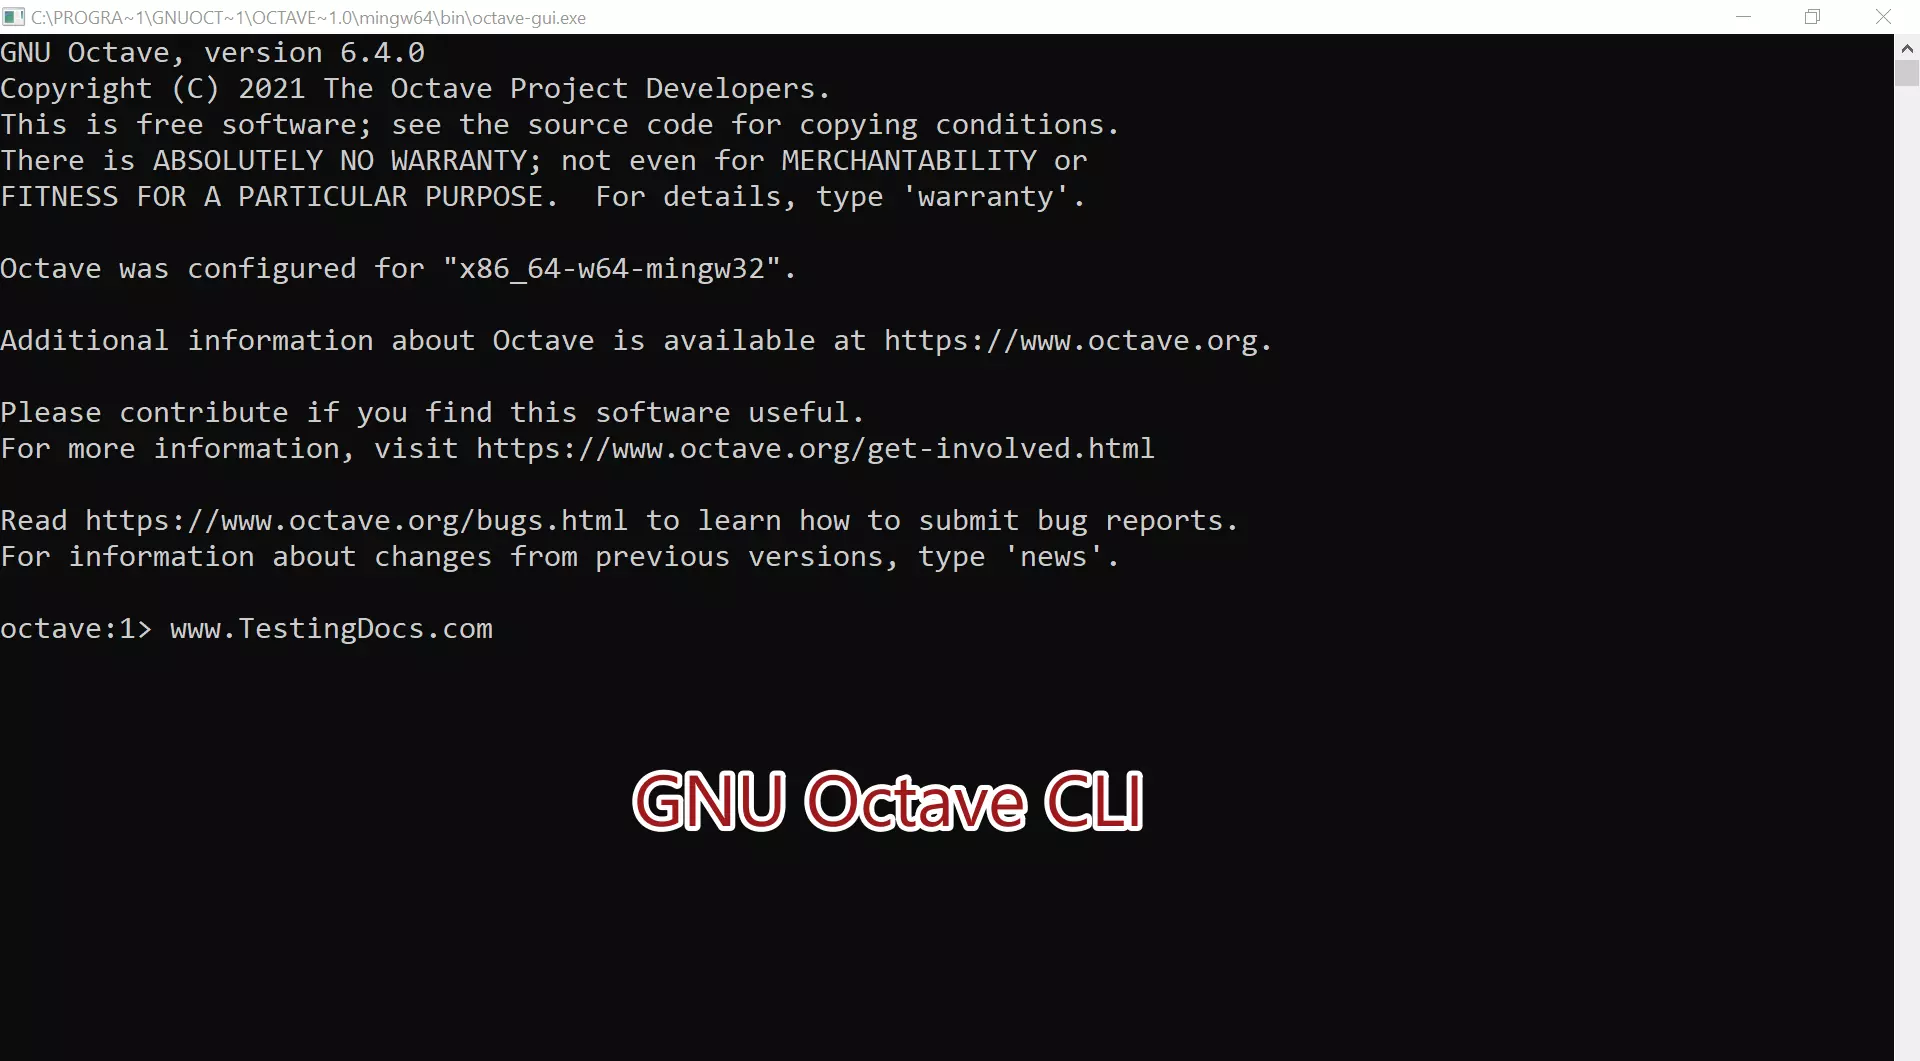 GNU Octave CLI Window